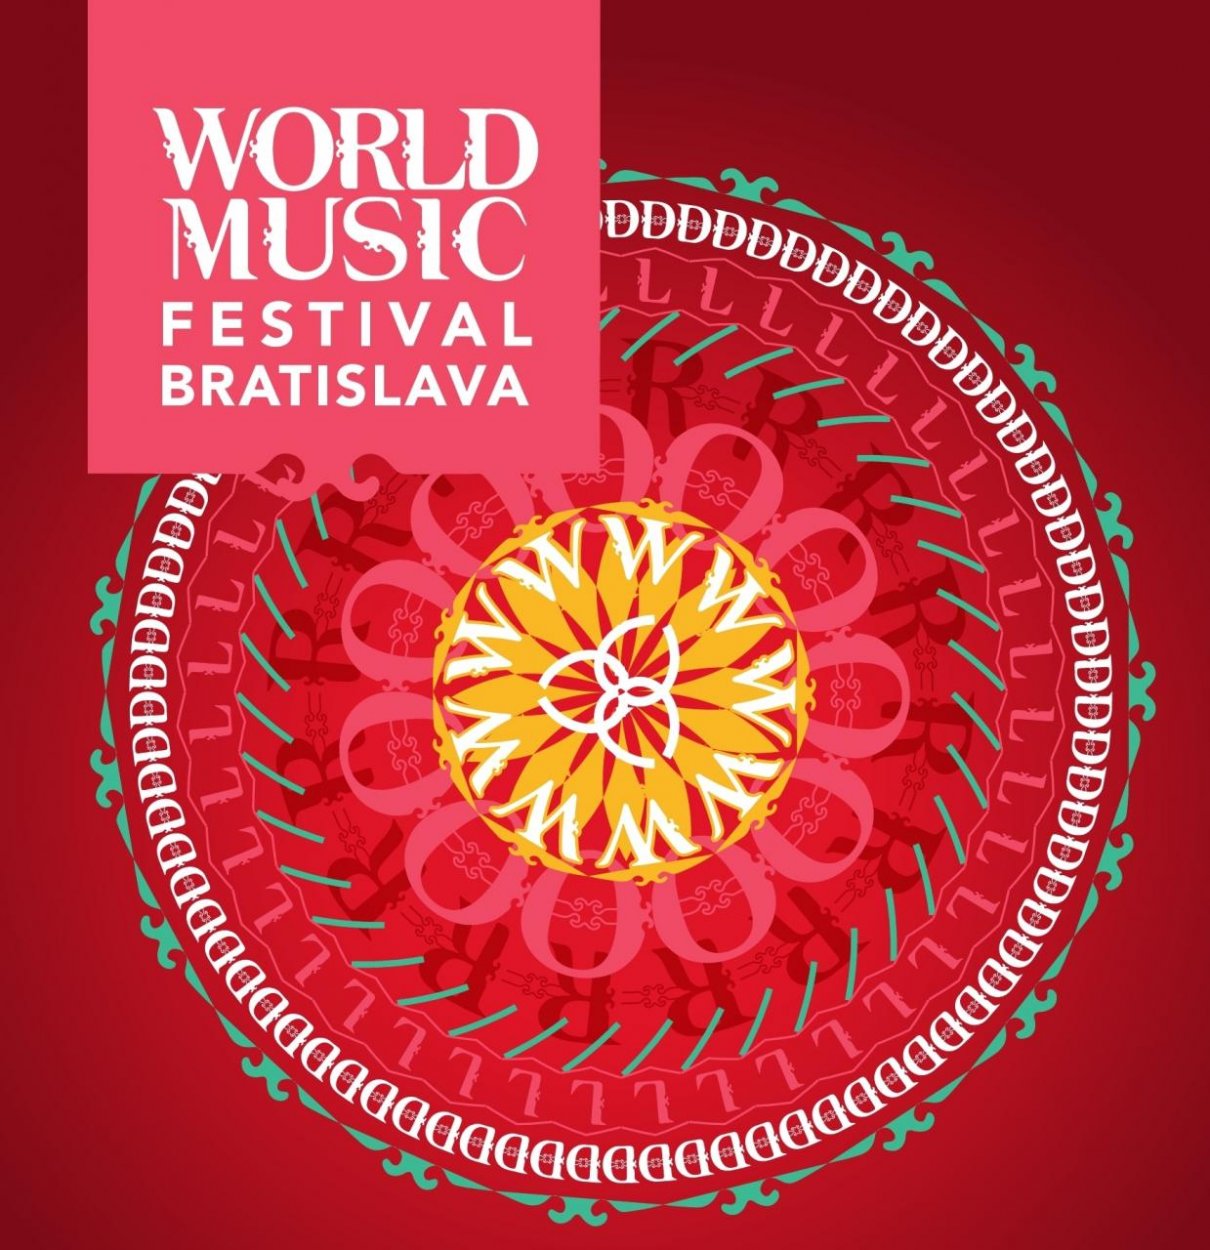 World Music Festival Bratislava medzi najlepšími etnofestivalmi sveta